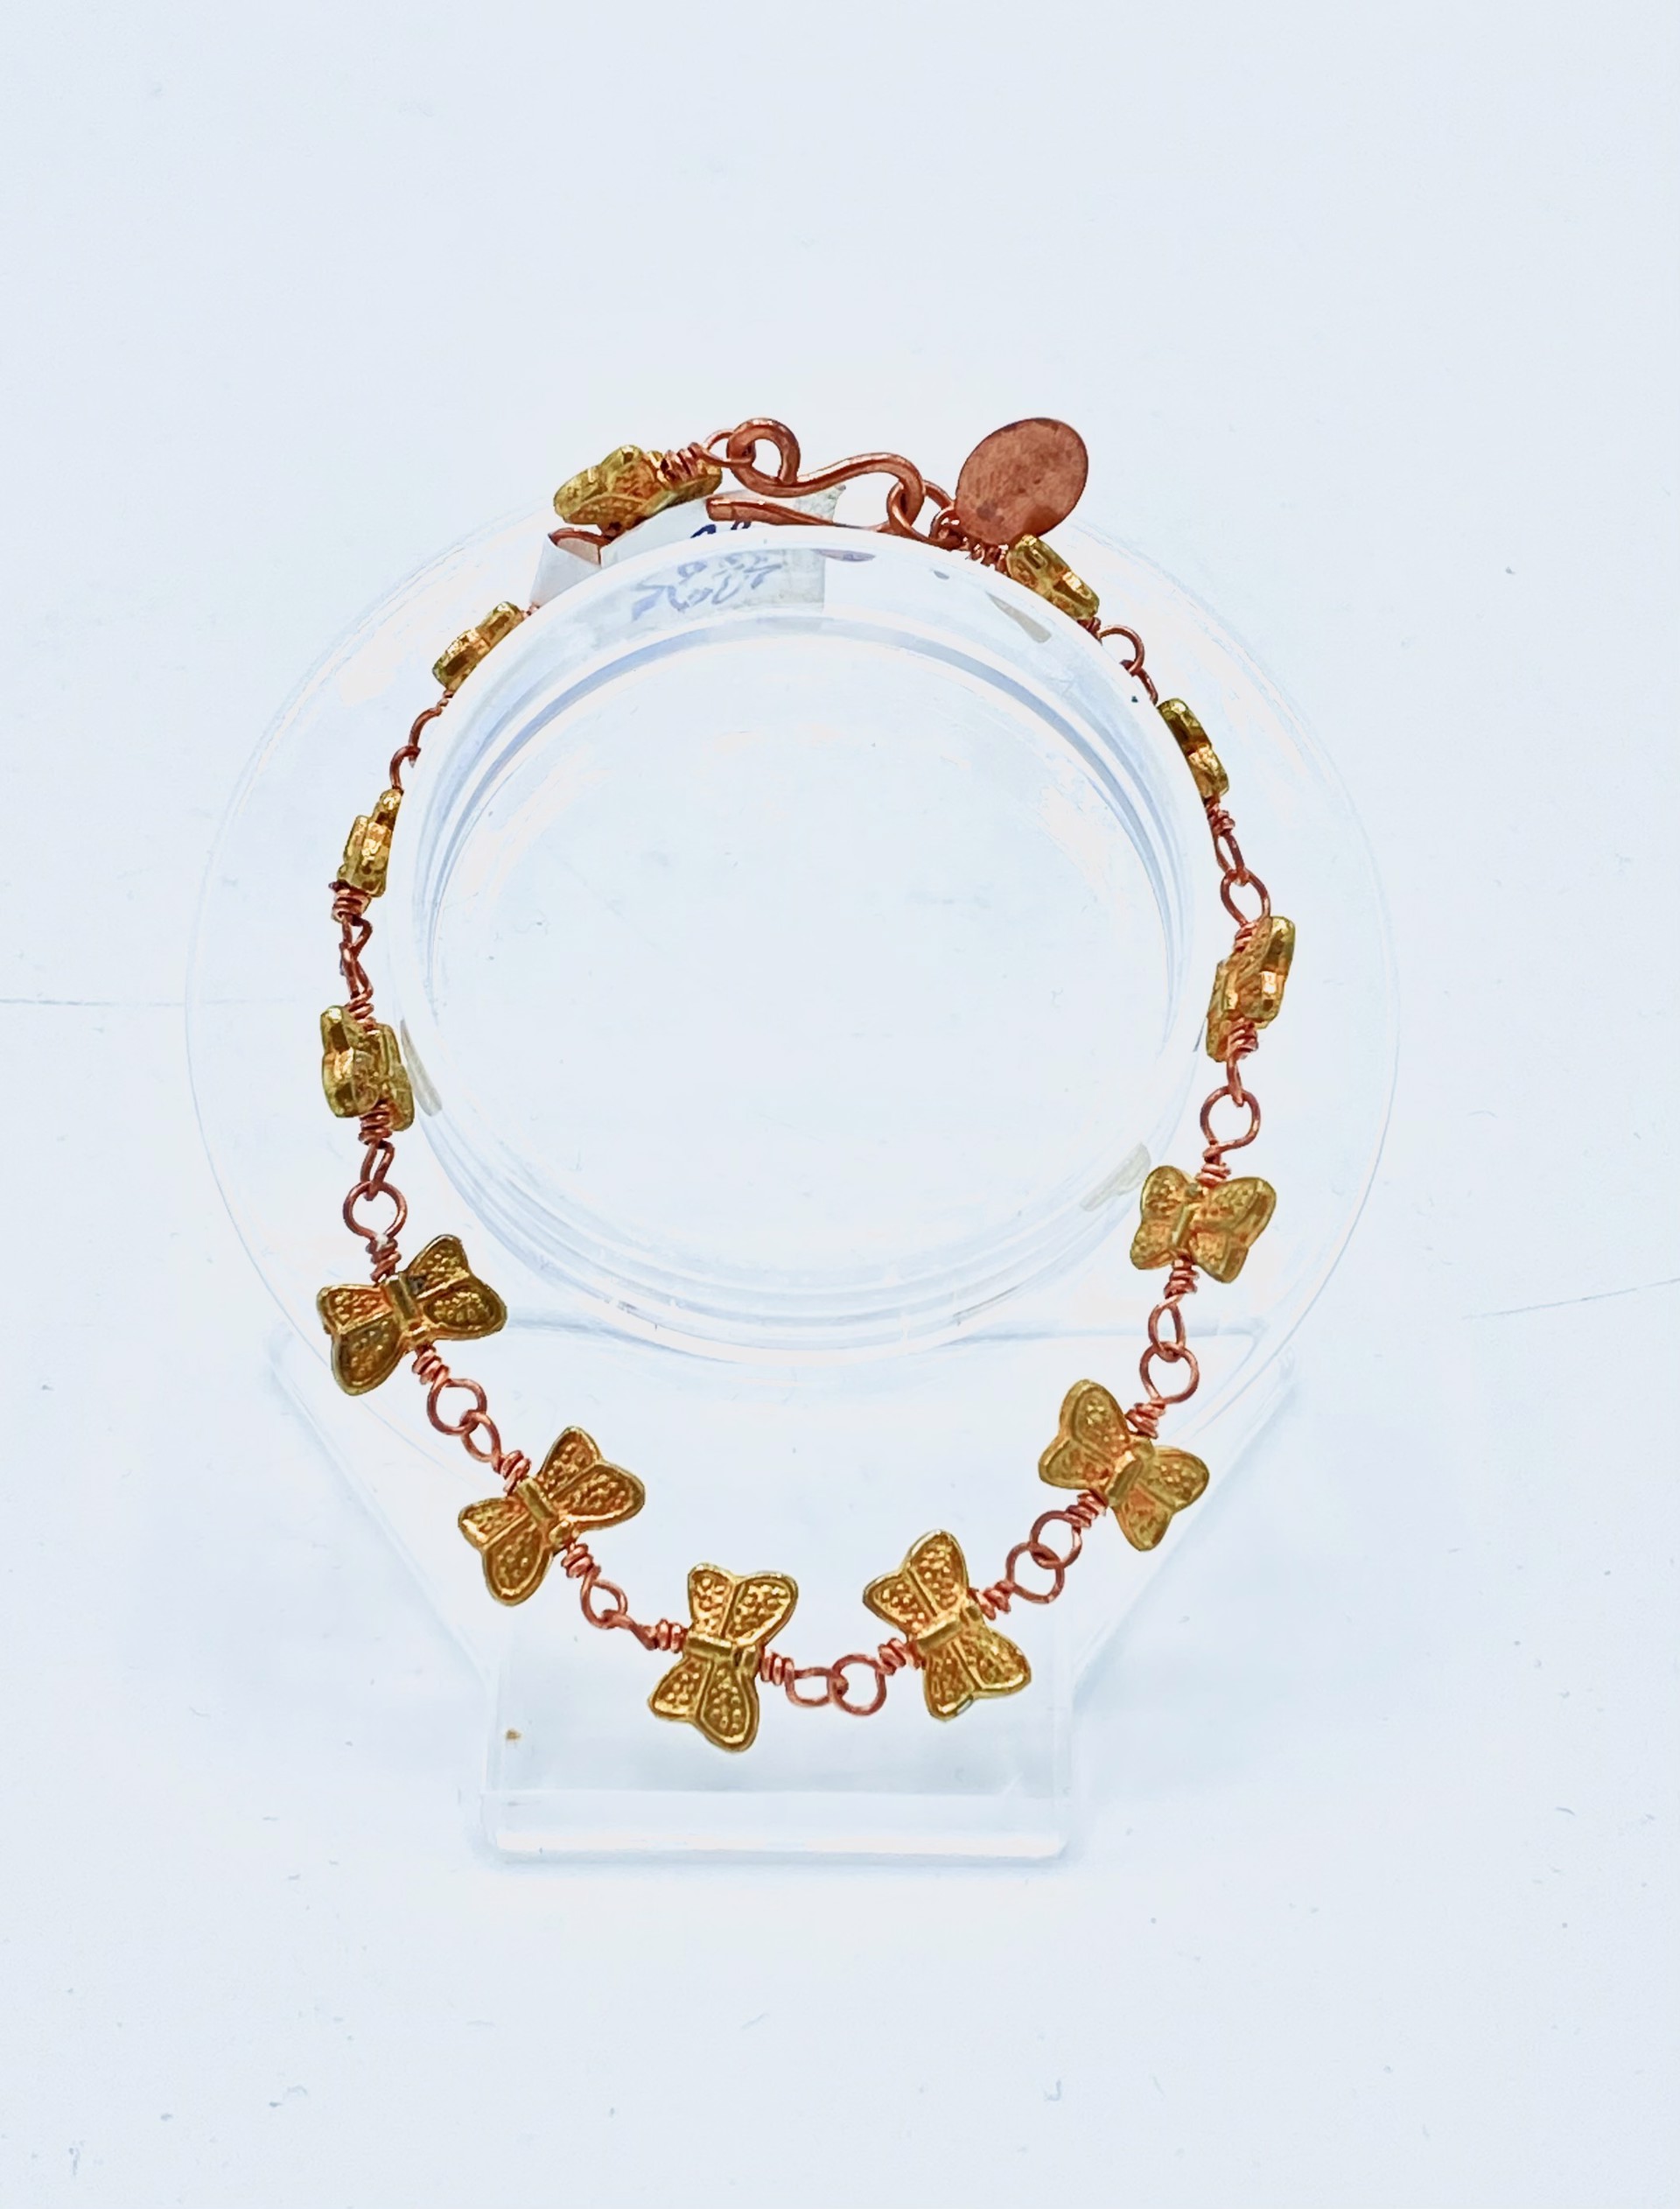 Bronze and Copper Butterfly Bracelet by Emelie Hebert